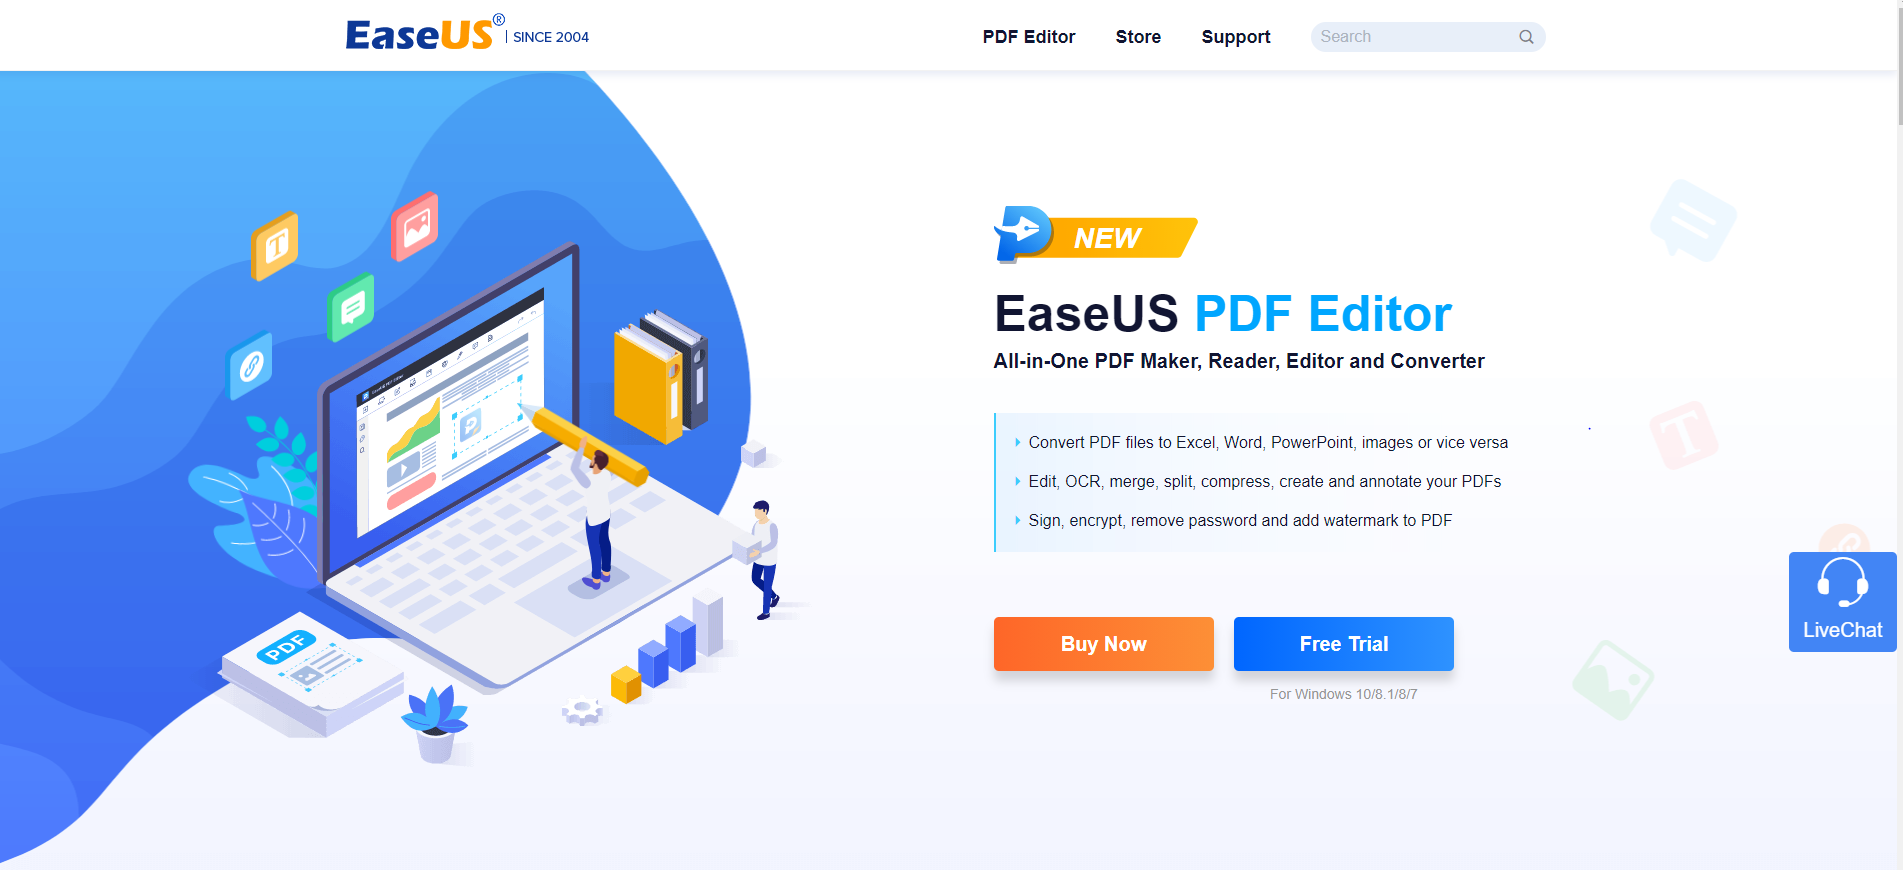 easeUS pdf editor